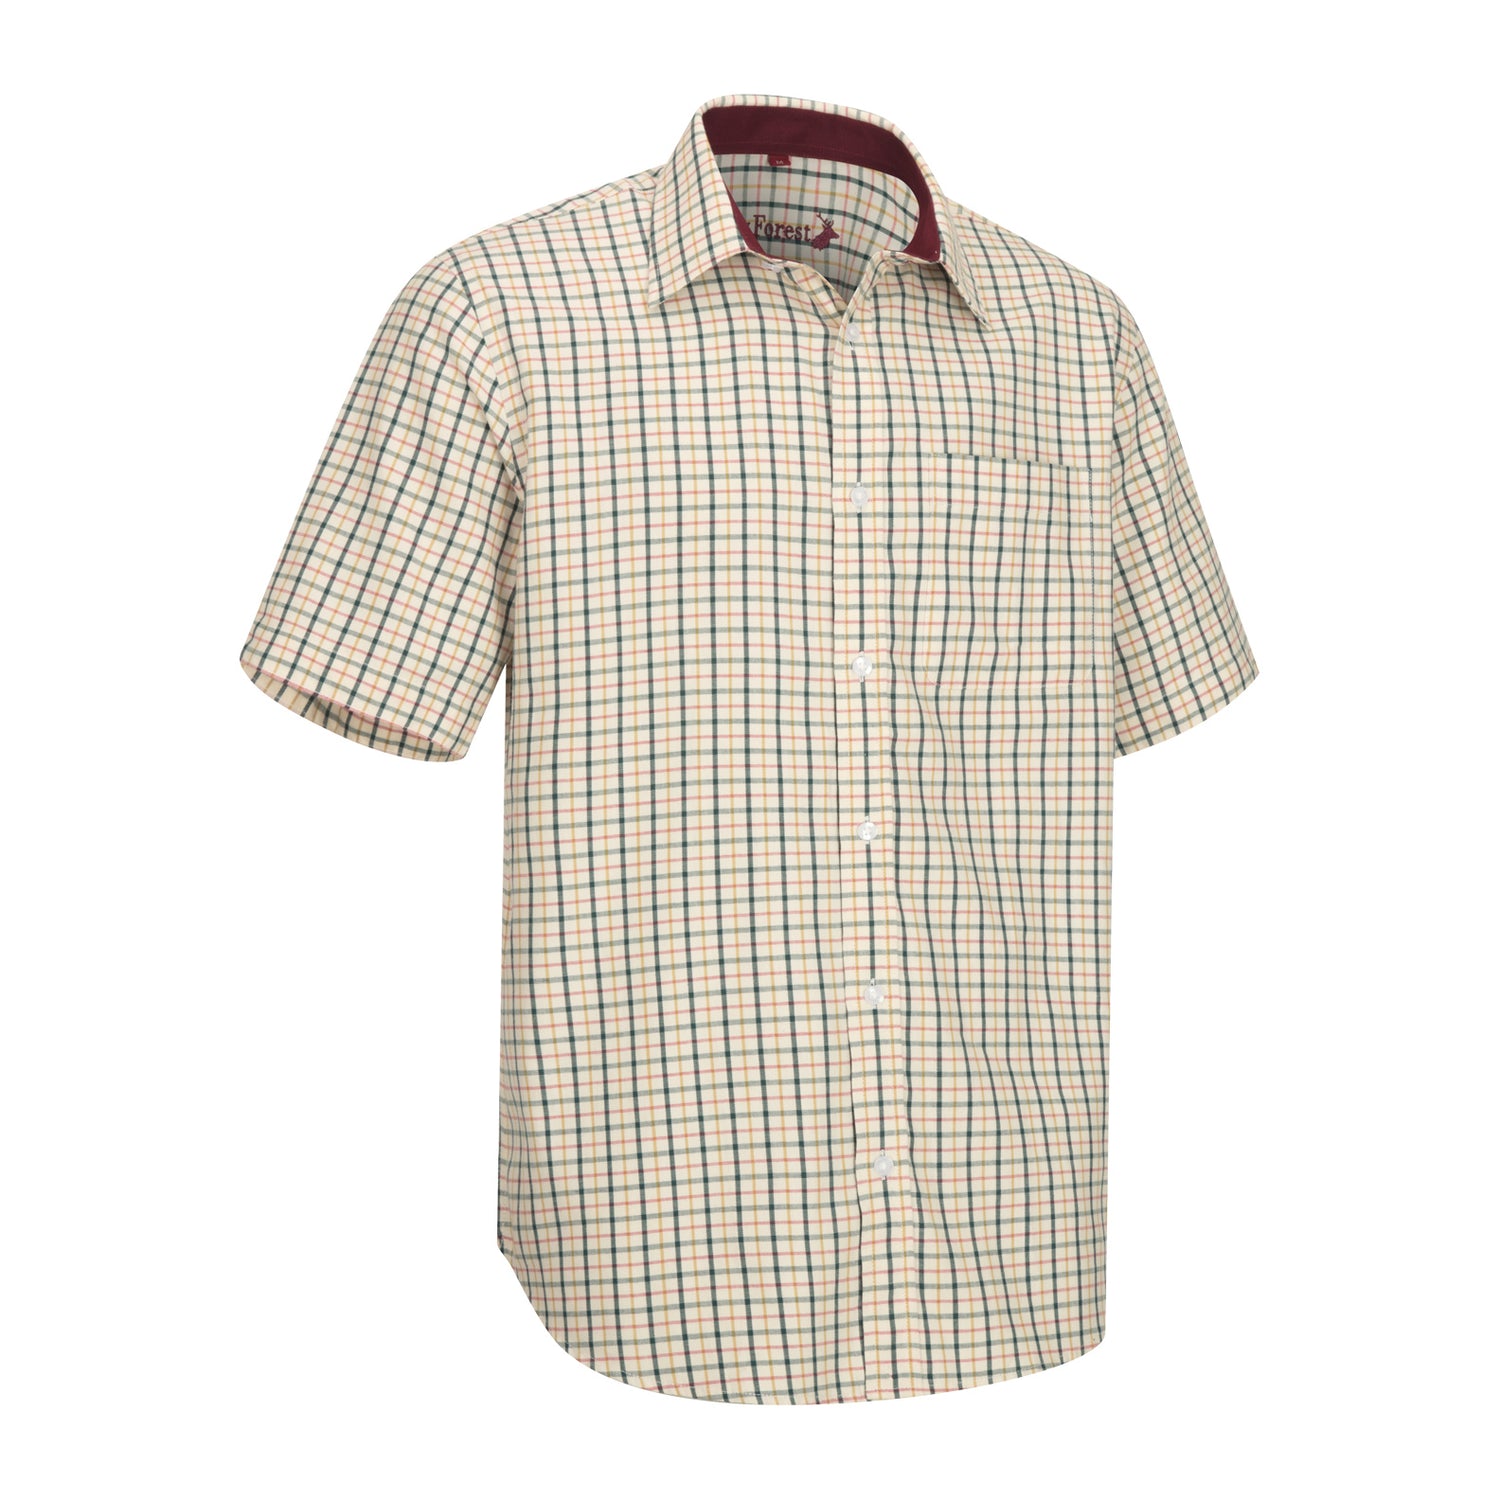 New-Forest-Premium-100%-Cotton-Short-Sleeve-Shirt